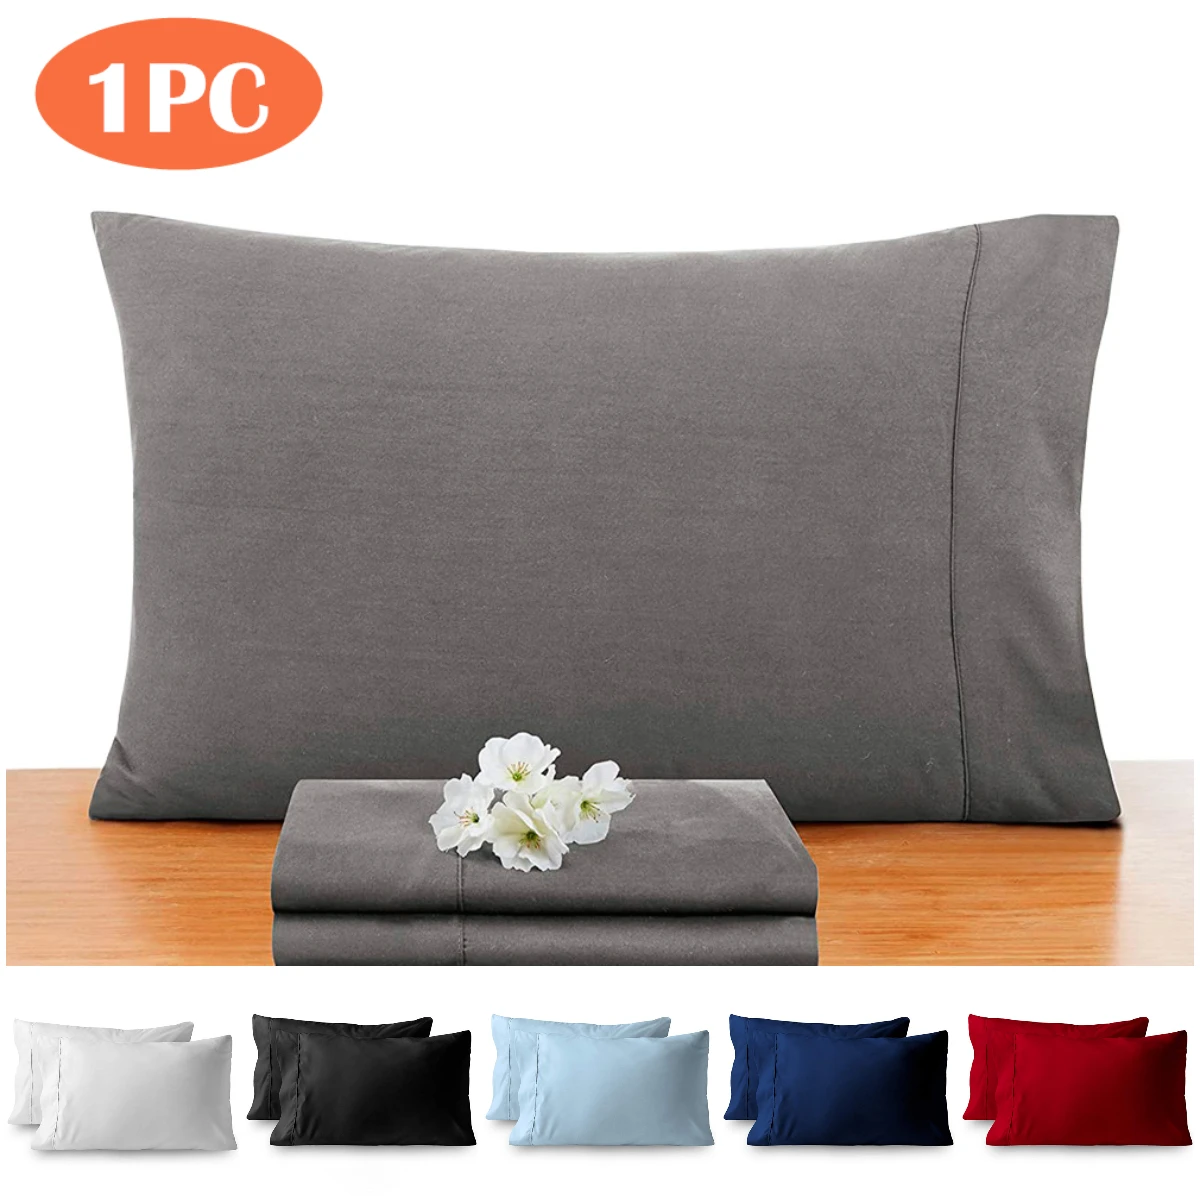 Standard/Queen/King Envelope Pillowcase Solid Pure Color Thick Cotton Polyester Bedding Pillows Case Ultra Soft Sleep Pillowcase